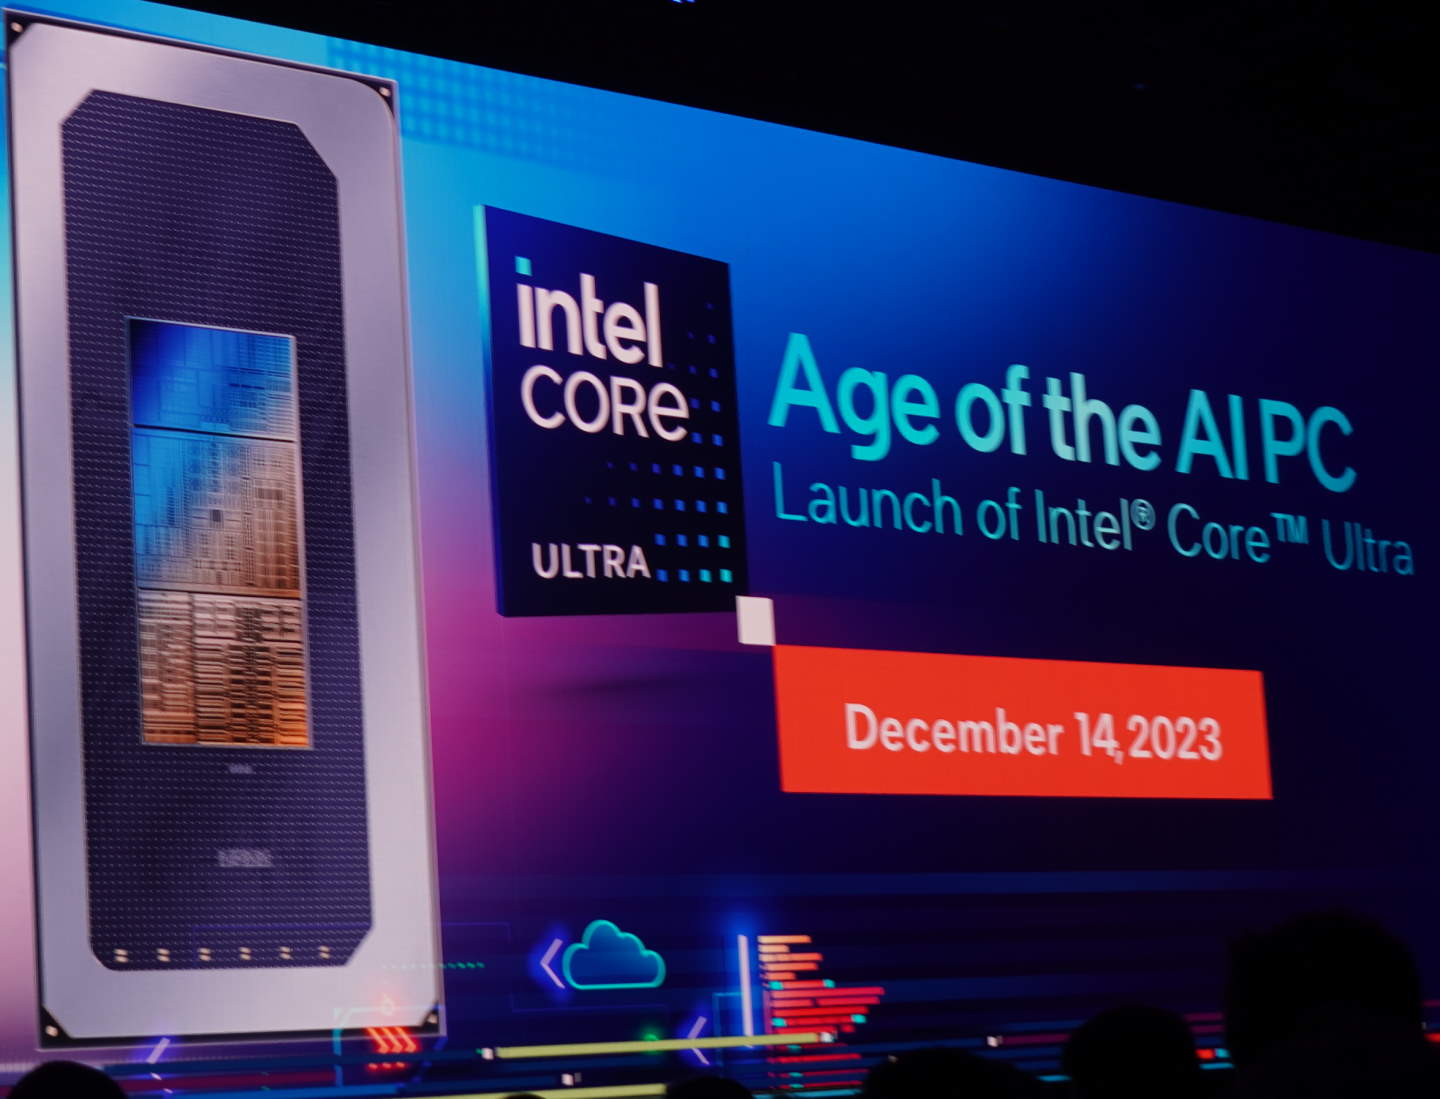  Meteor Lake的產品名稱為Core Ultra處理器，於2023年12月14日式推出。